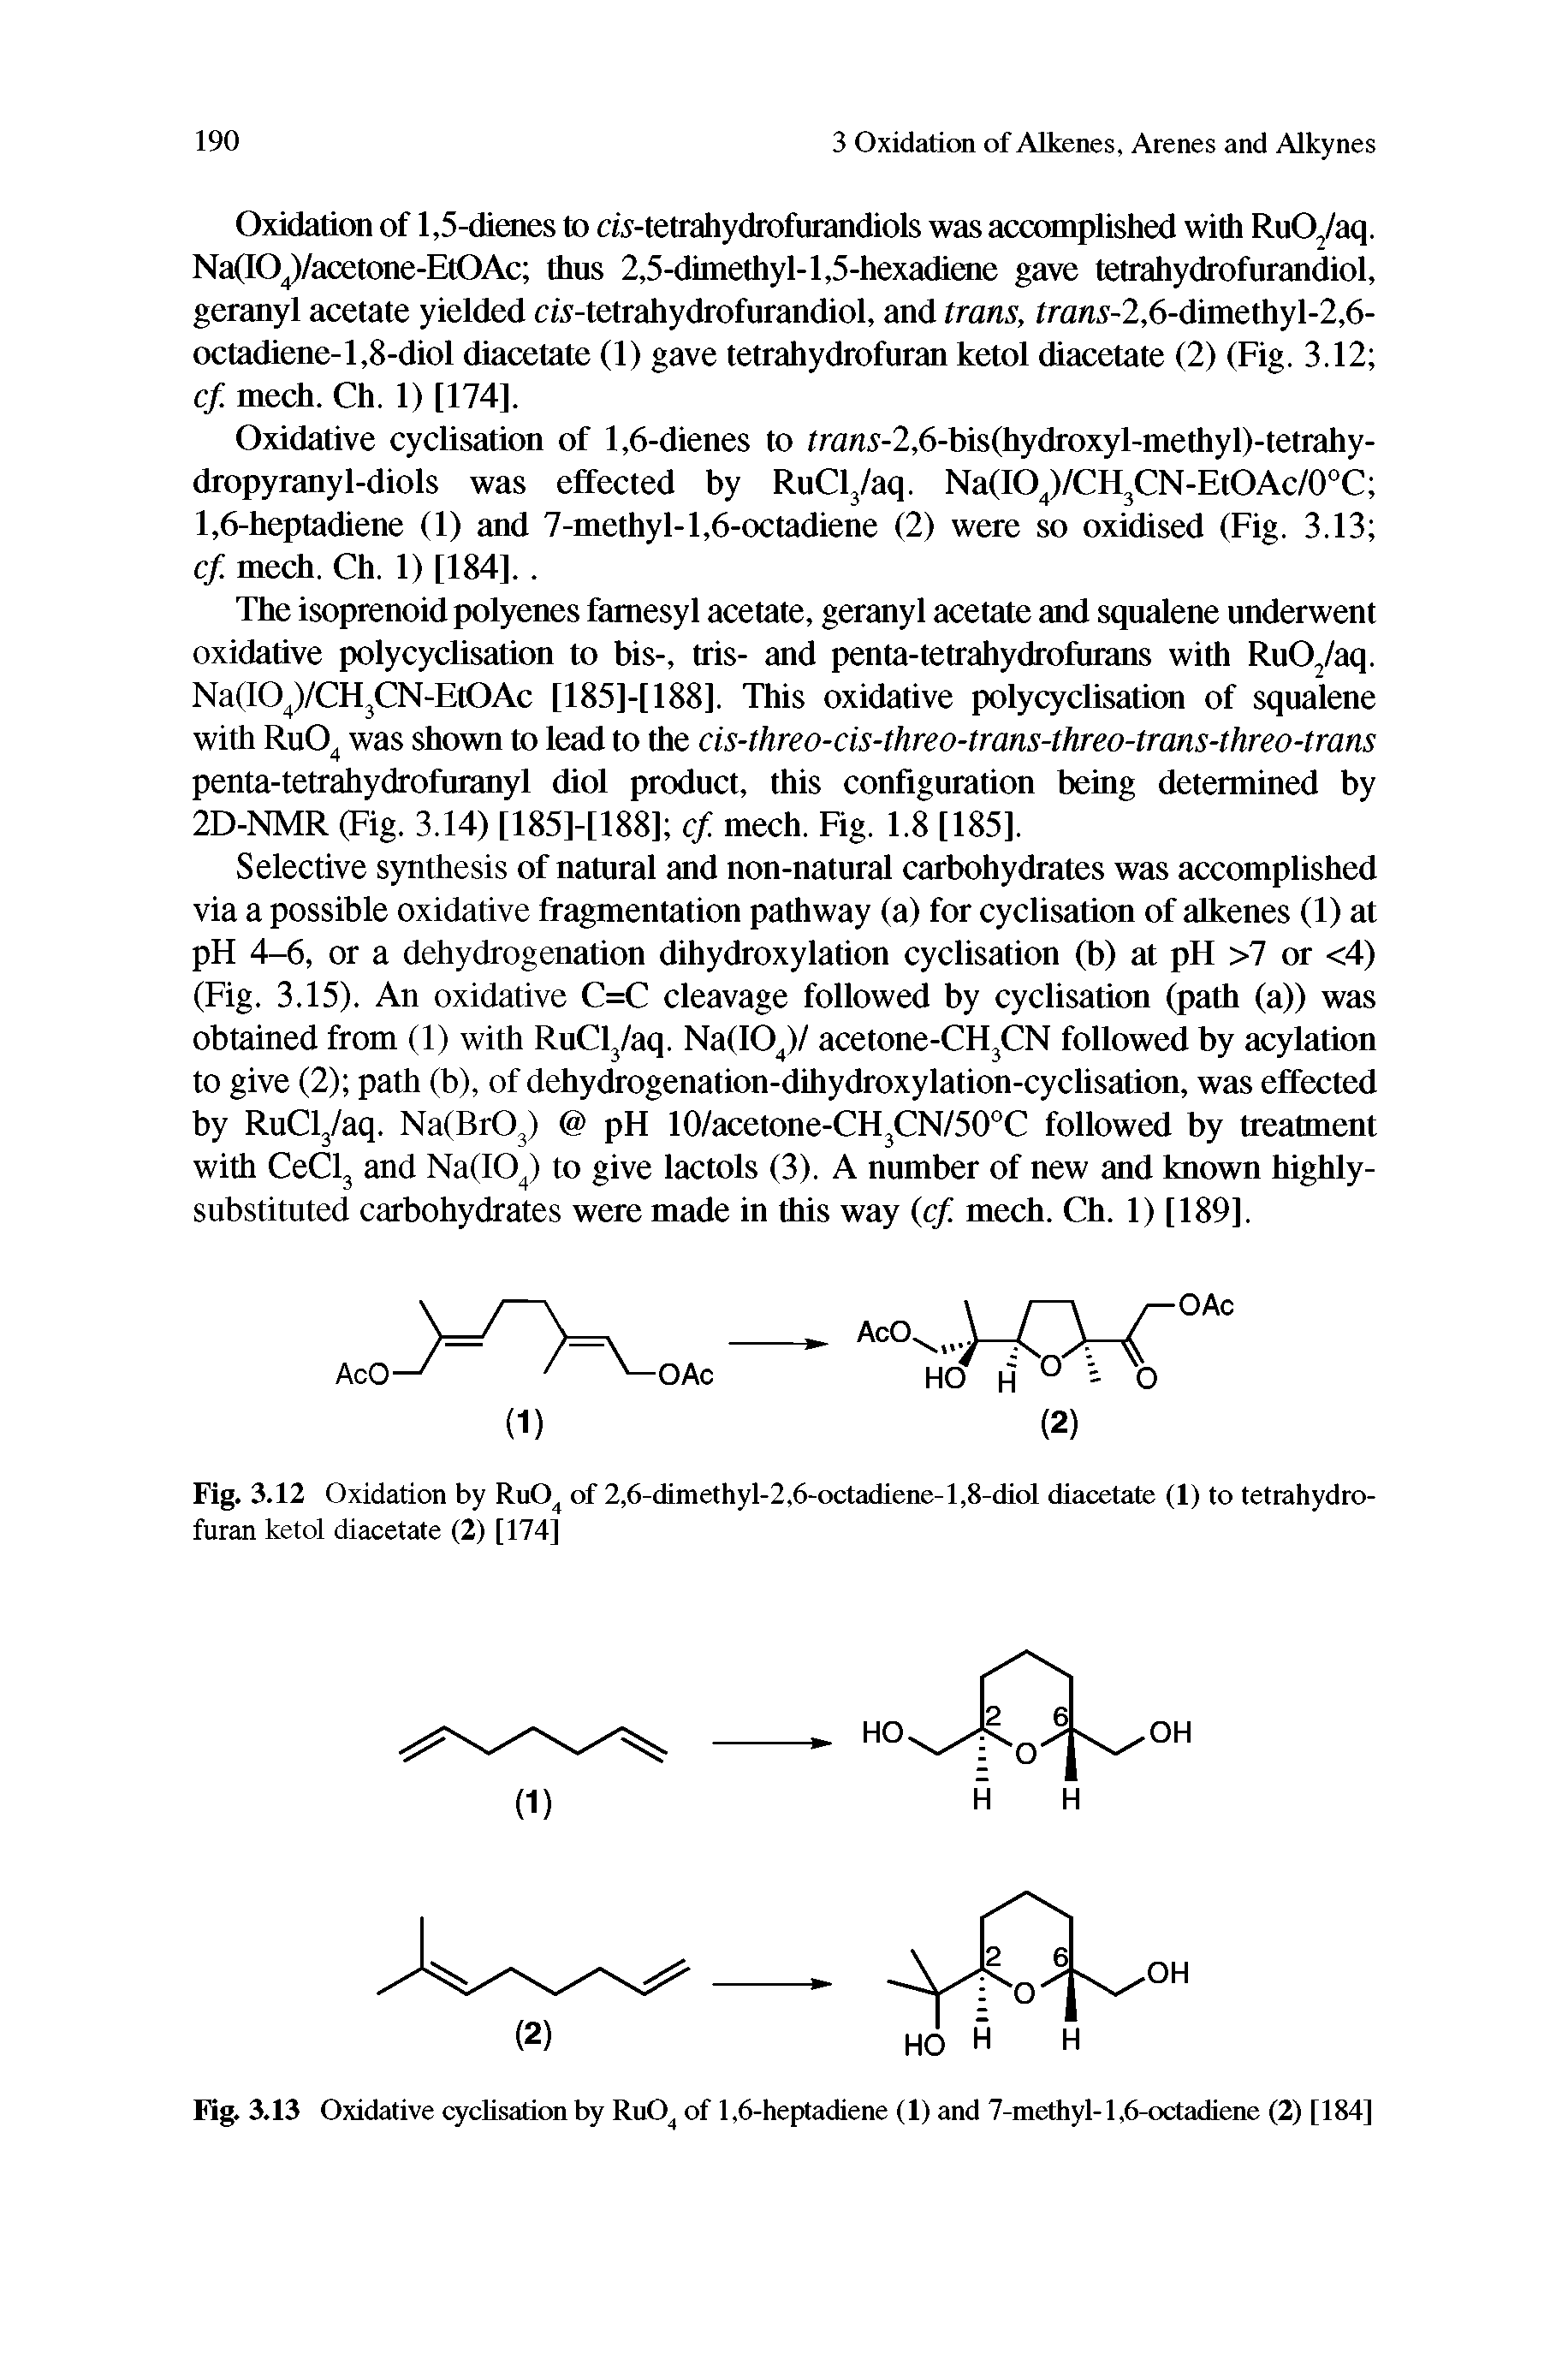 Fig. 3.12 Oxidation by RuO of 2,6-dimethyl-2,6-octadiene-l,8-diol diacetate (1) to tetrahydrofuran ketol diacetate (2) [174]...